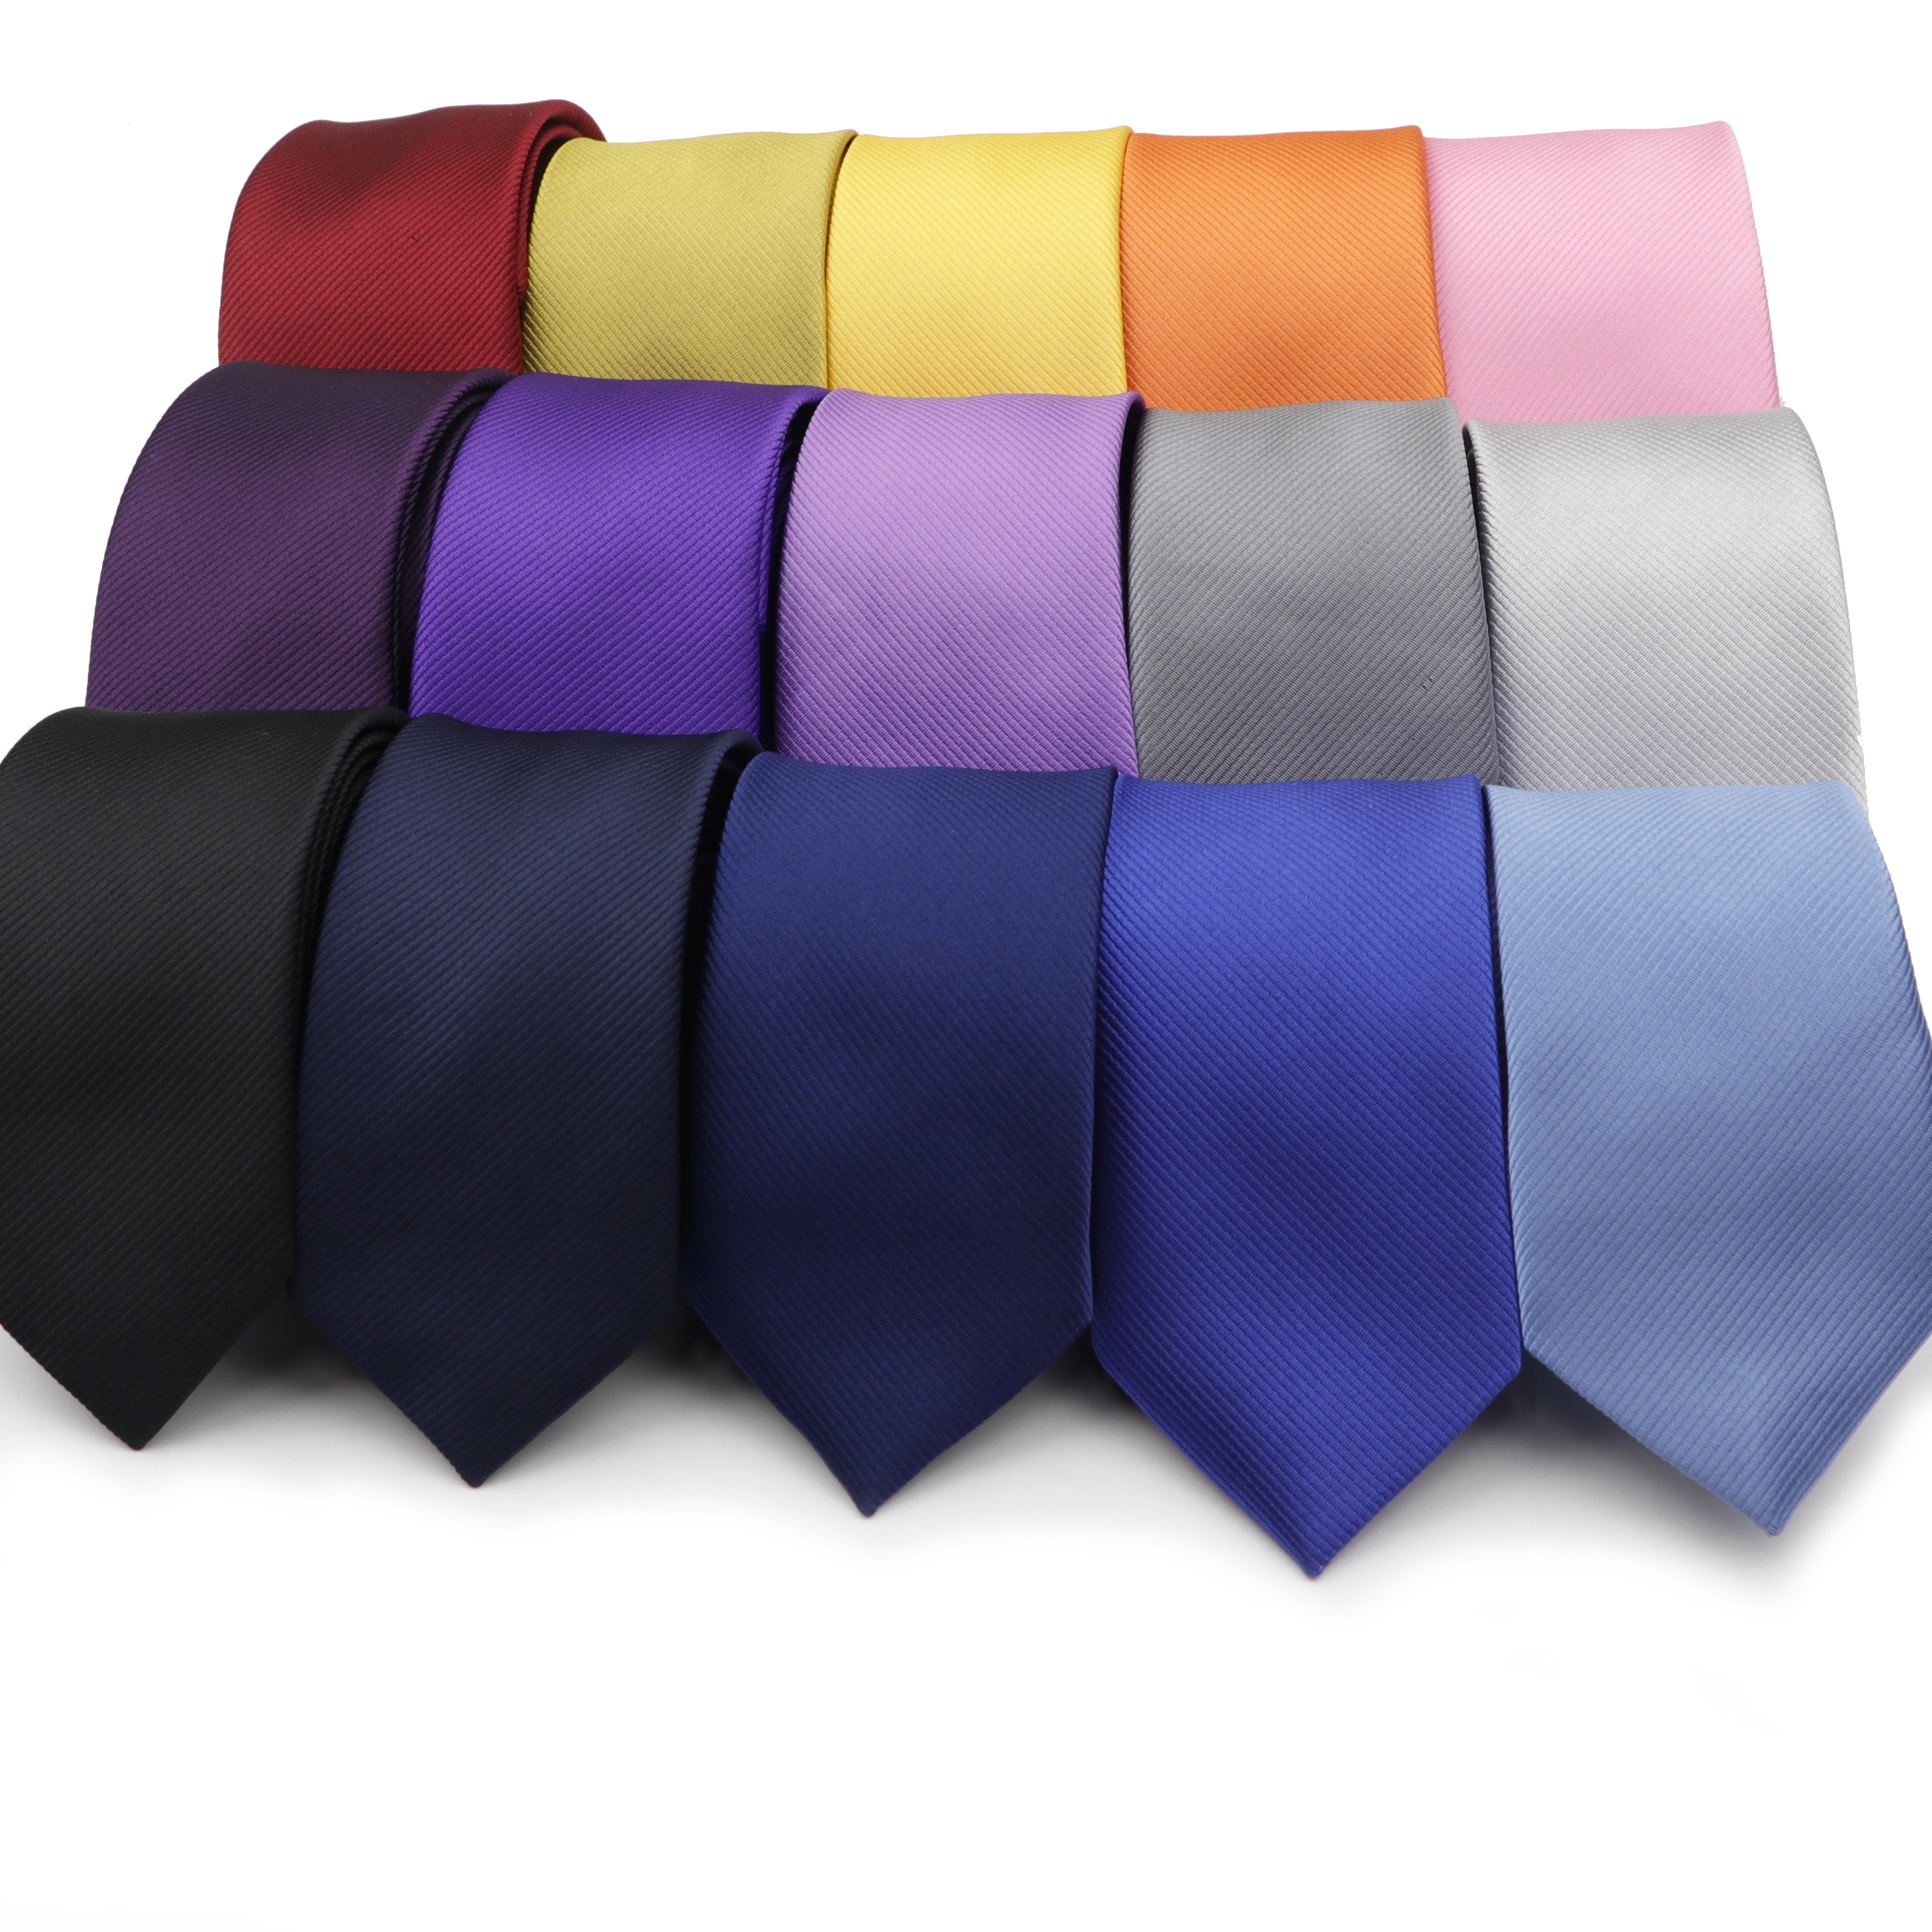 Corbata Formal para hombre, corbatas ajustadas de tamaño clásico, corbatas de boda coloridas sólidas, 2,5 pulgadas, Caballero de novio, gravata estrecha